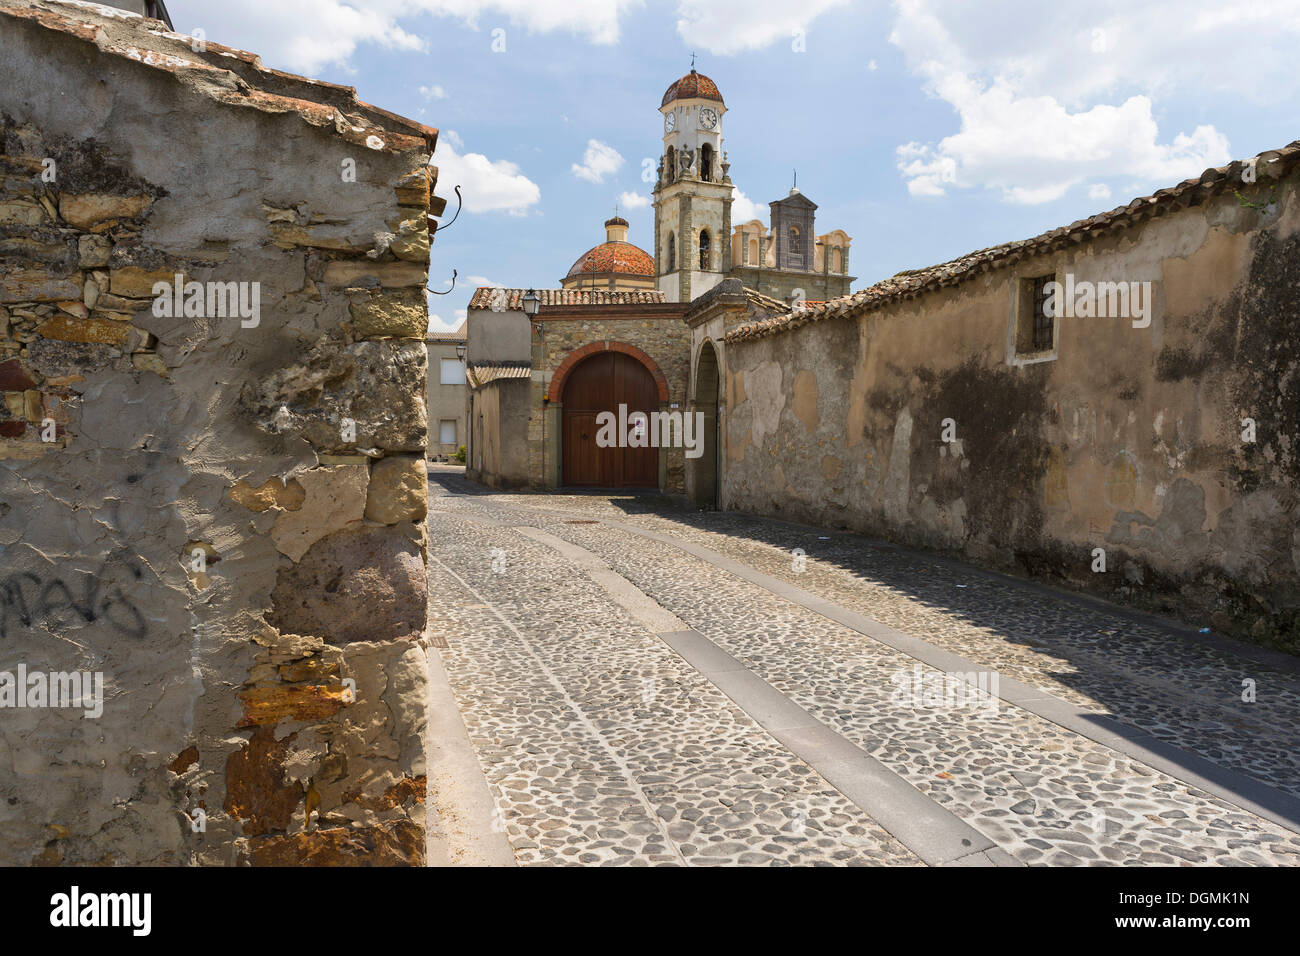 Church and lane in Sanluri, Medio Campidano, Province of Cagliari, Sardinia, Italy, Europe Stock Photo